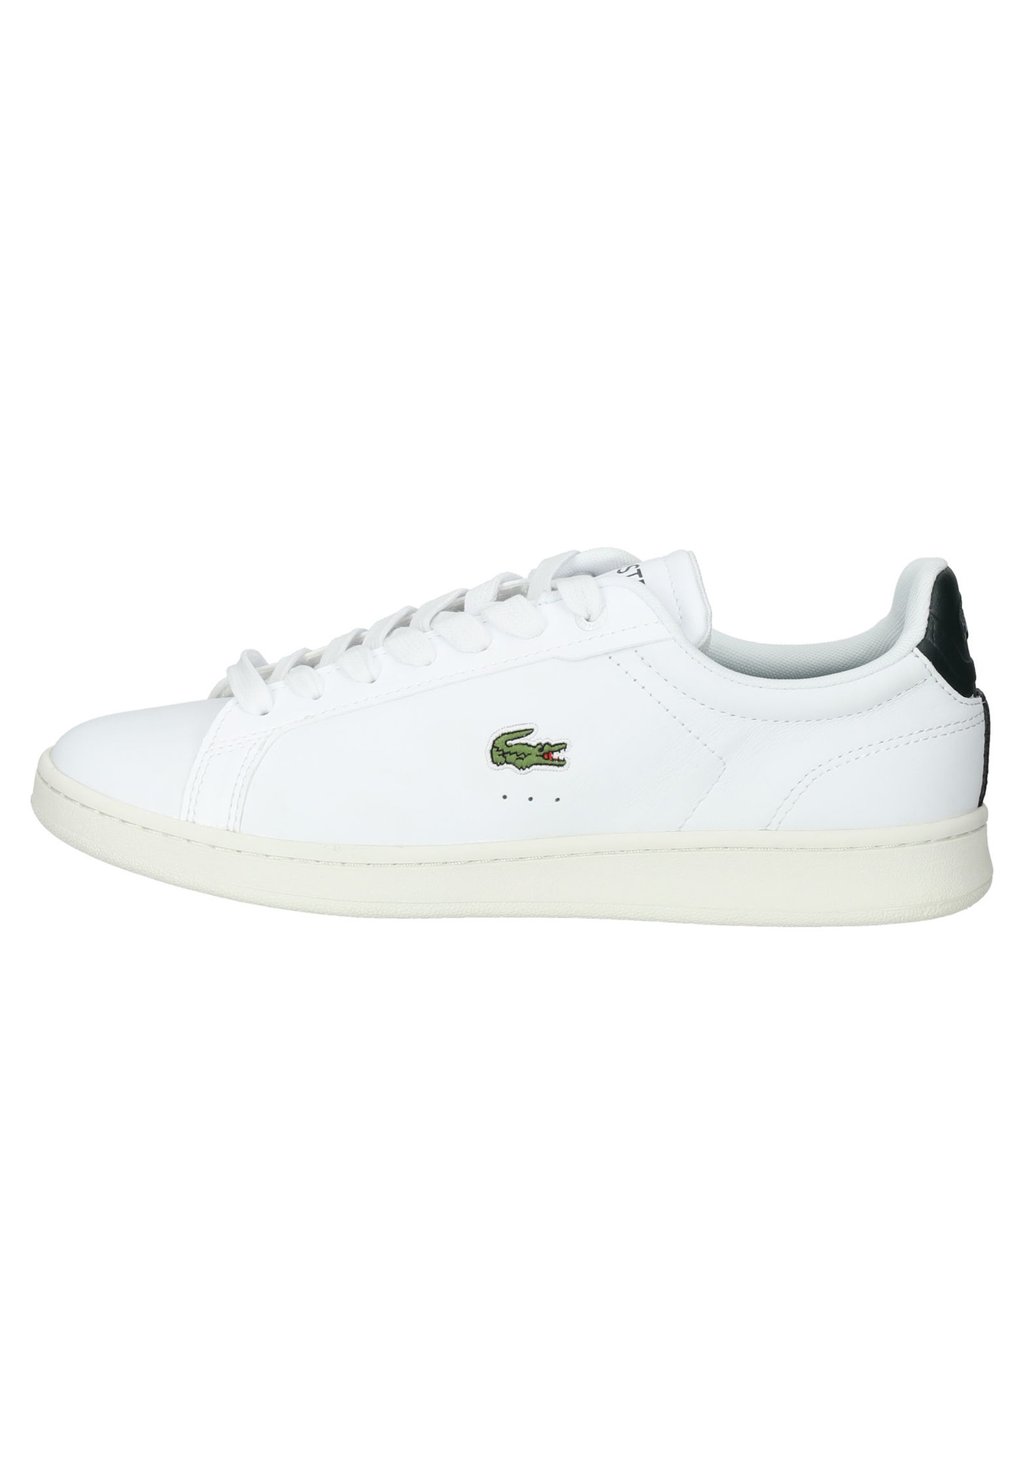 Кроссовки Lacoste Carnaby Pro 123 9 Sma, белый / темно-зеленый кроссовки lacoste l004 747cuj0001 wht grn 082 белый